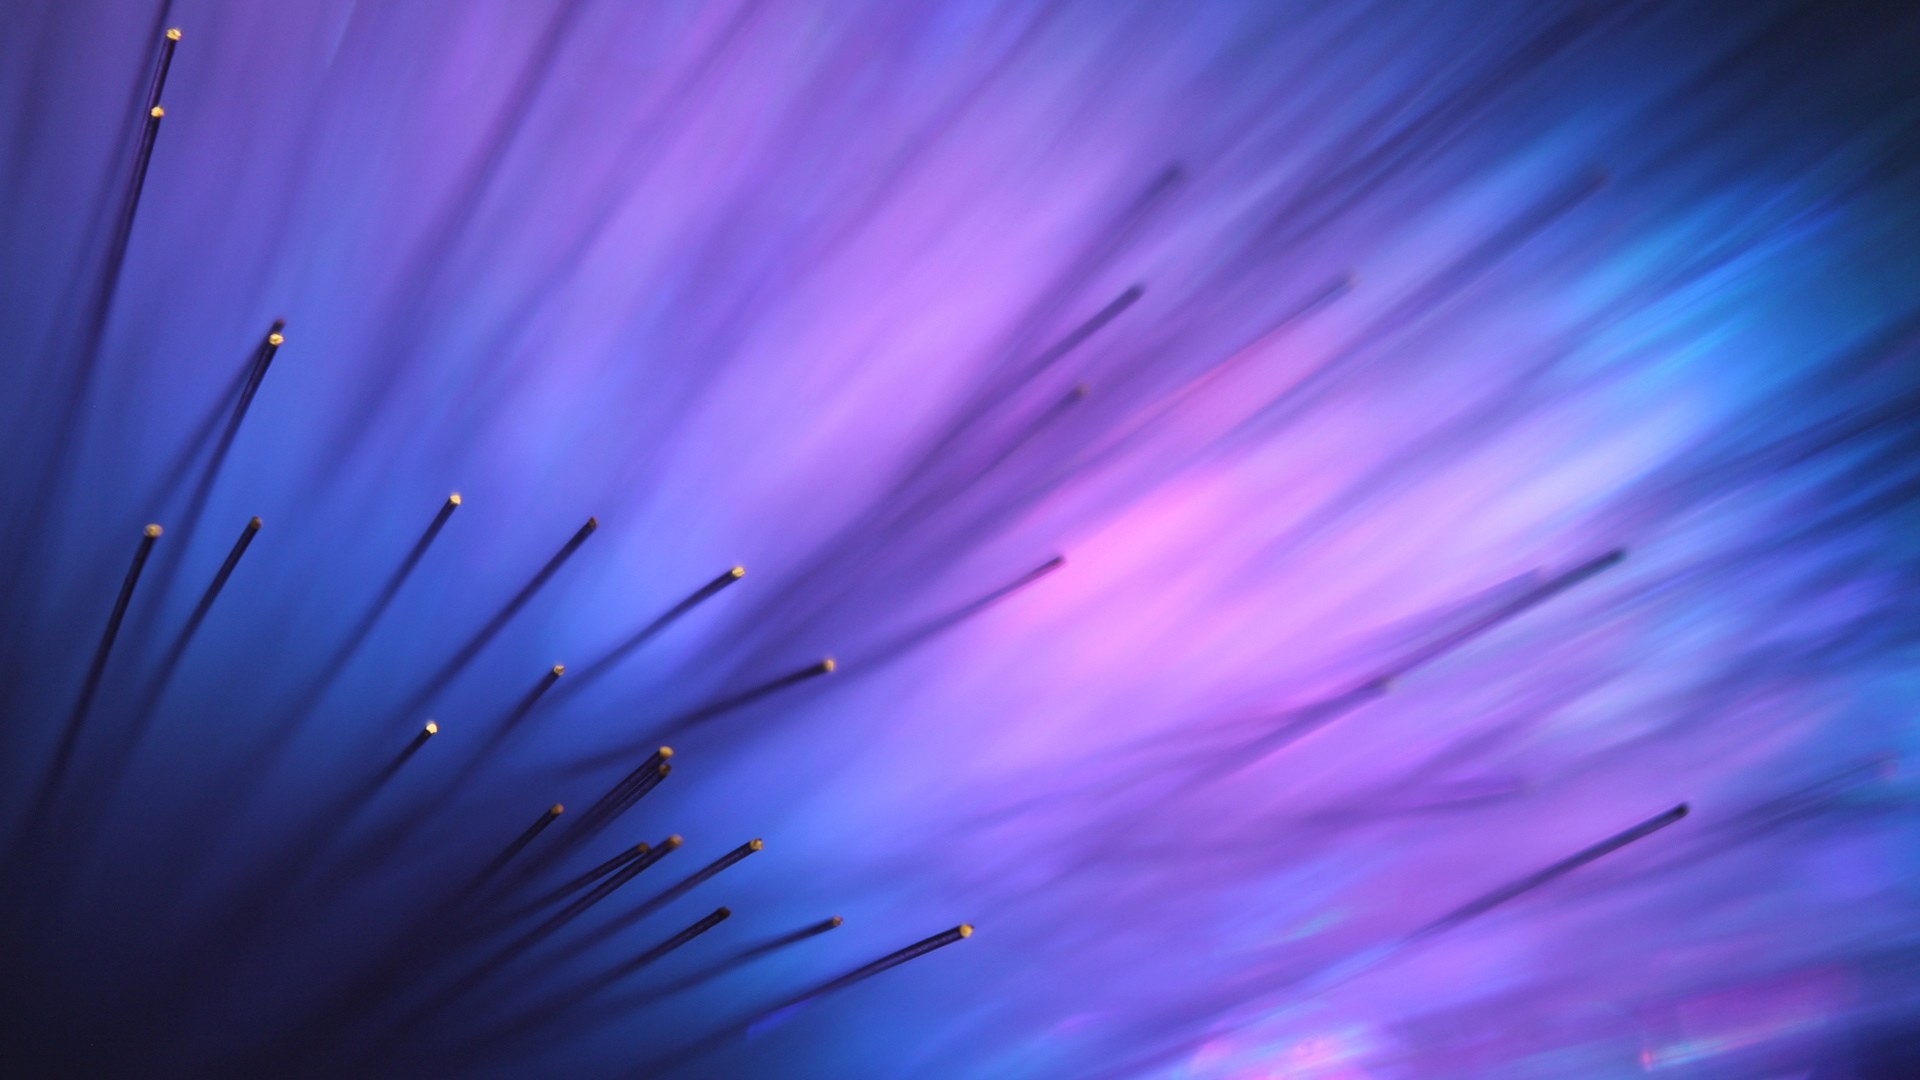 General 1920x1080 abstract Optic fiber macro digital art lines CGI depth of field purple blue violet